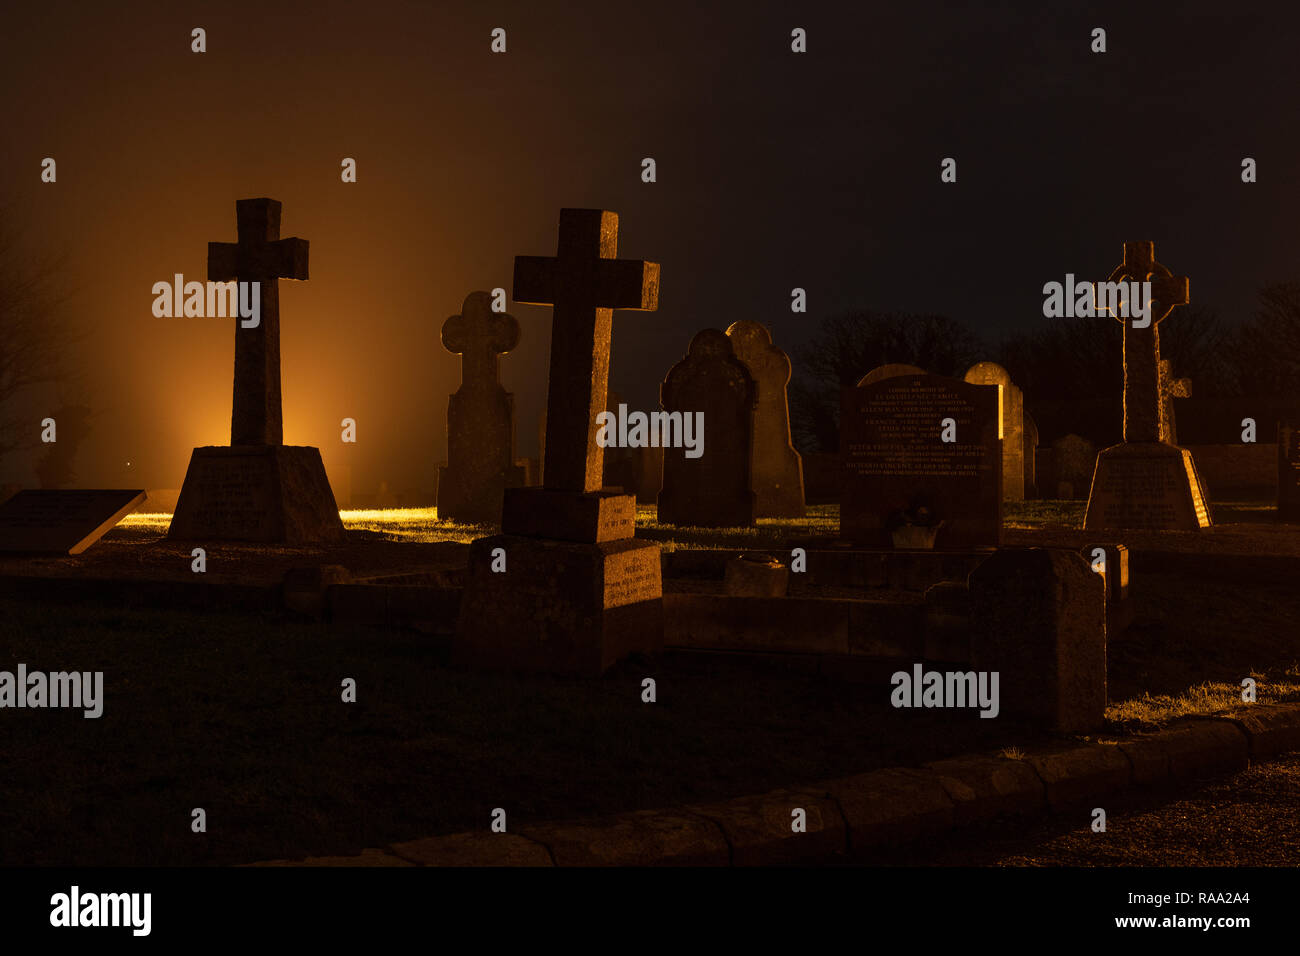 Illuminated Grave Stones Stock Photo